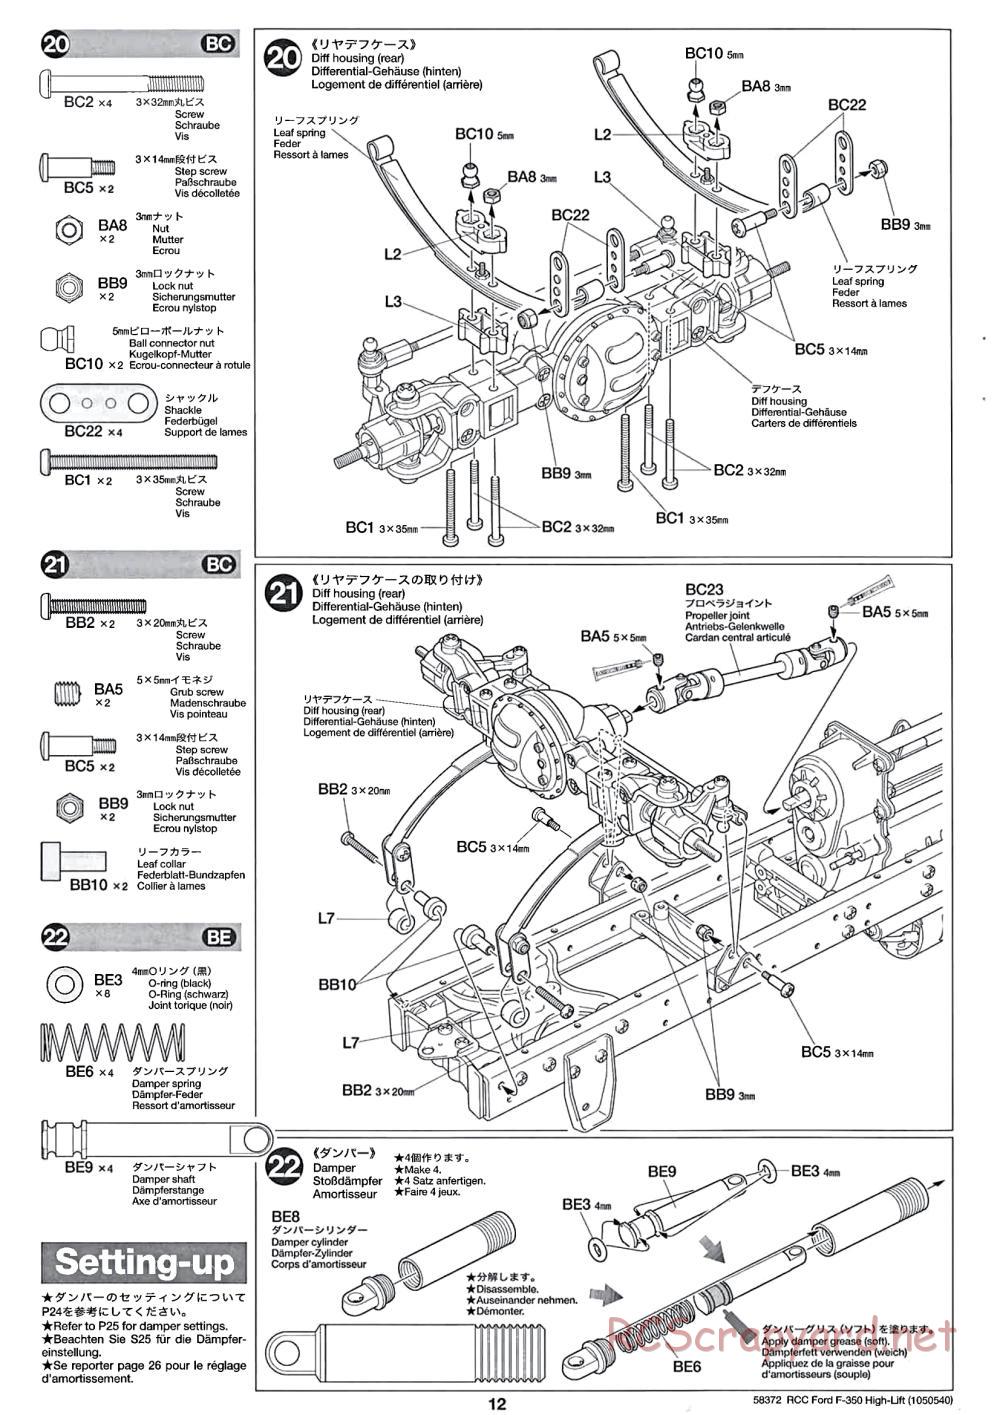 Tamiya - Ford F350 High-Lift Chassis - Manual - Page 12